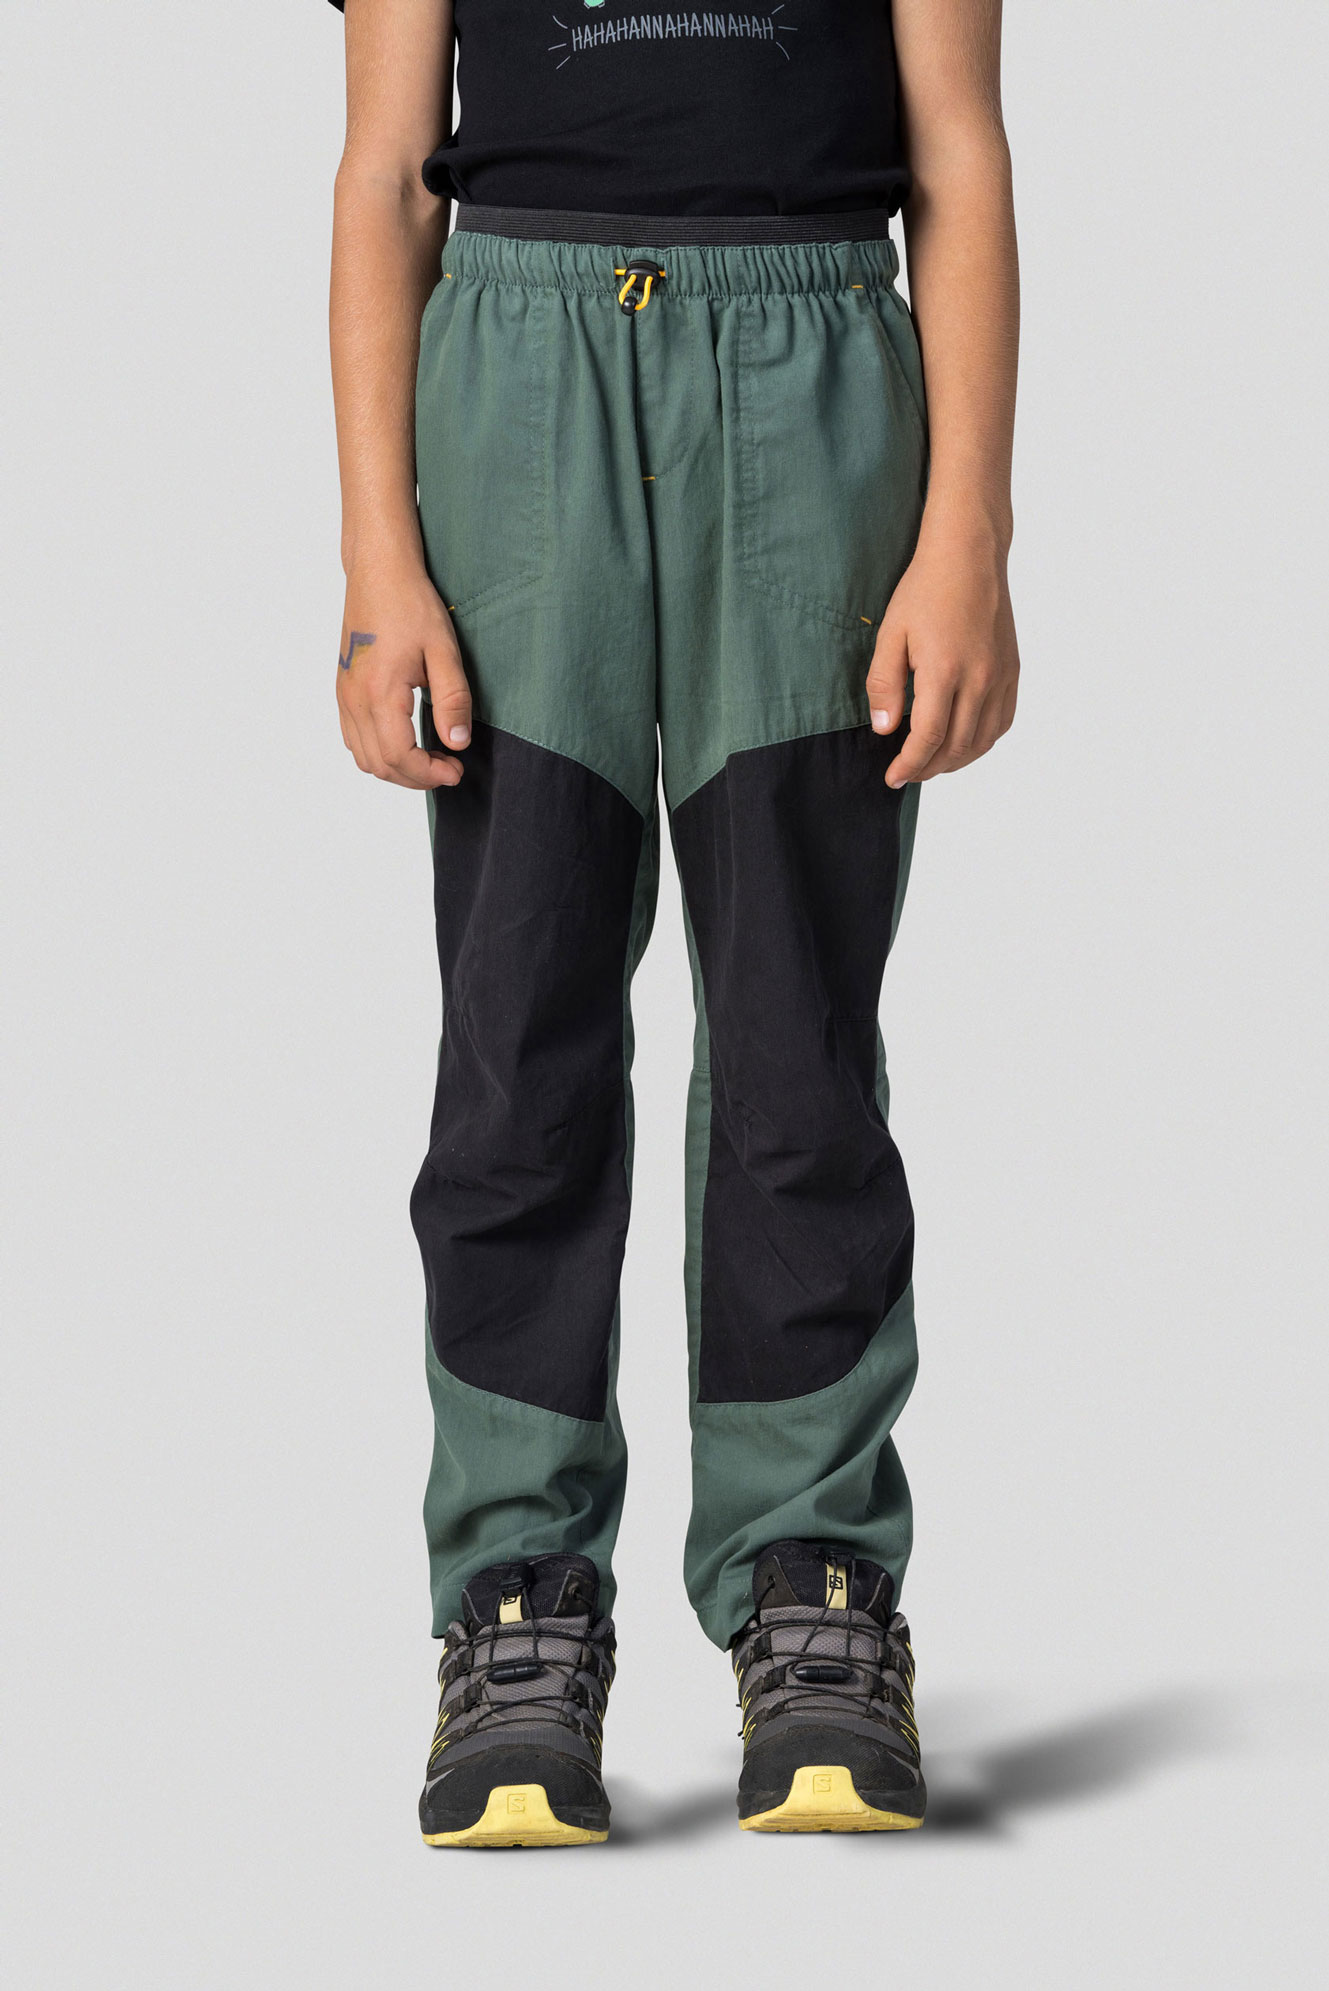 Children's outdoor trousers